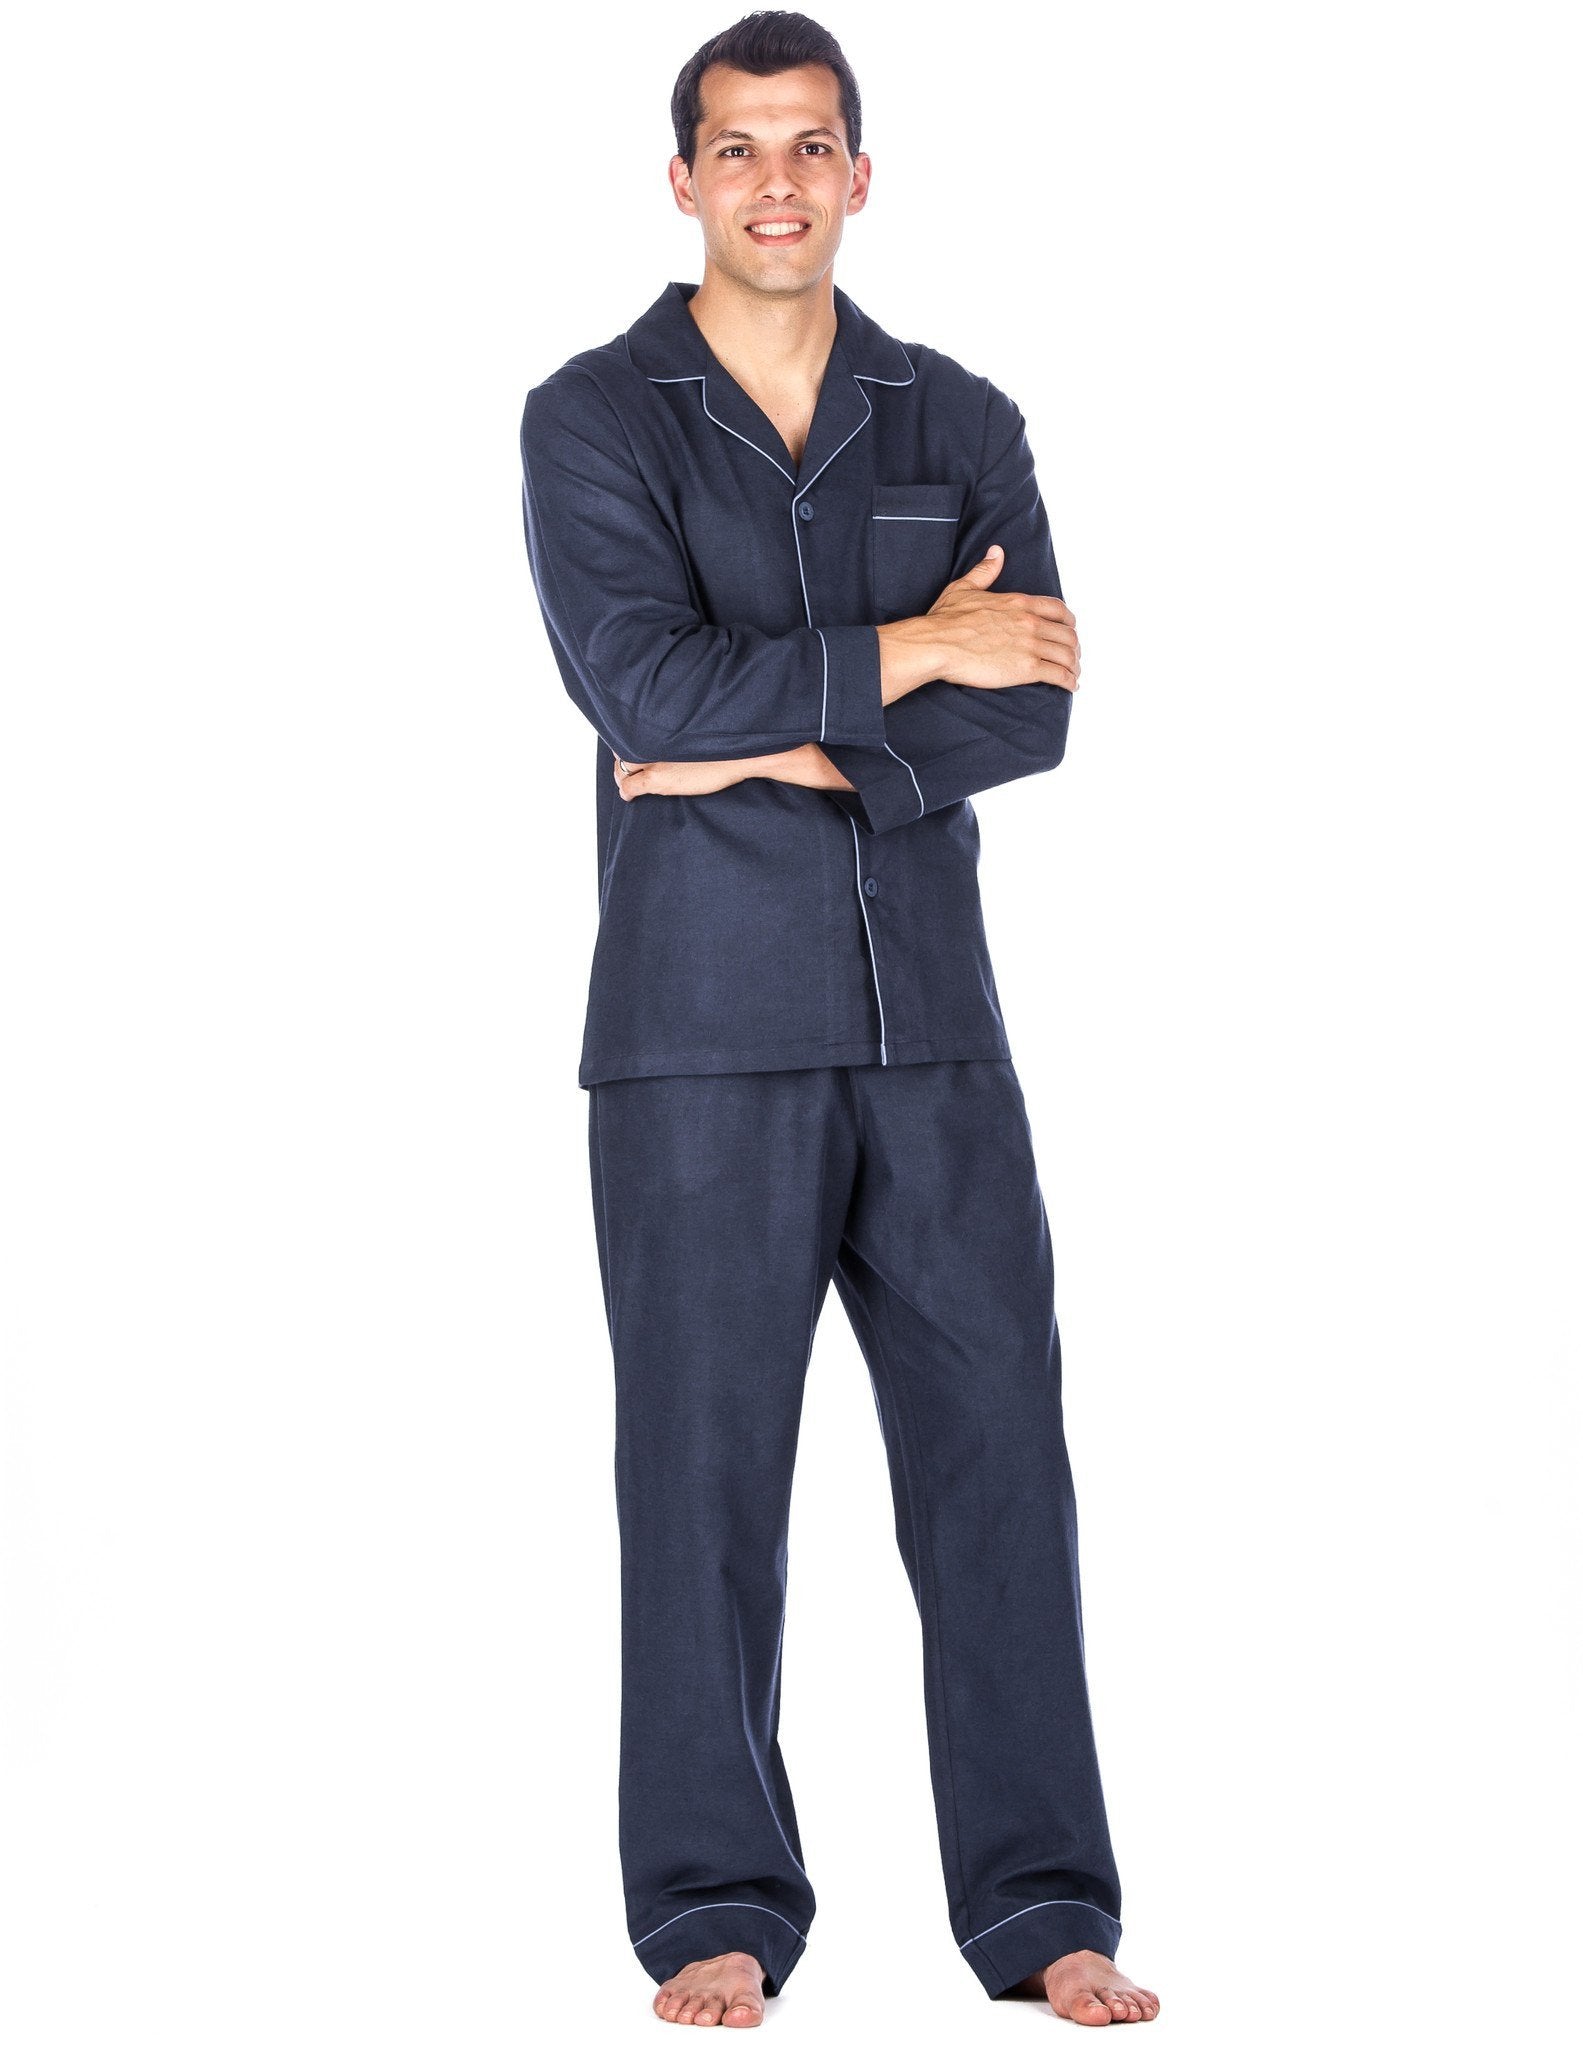 Relaxed Fit Men's Premium 100% Cotton Flannel Pajama Sleepwear Set - Navy